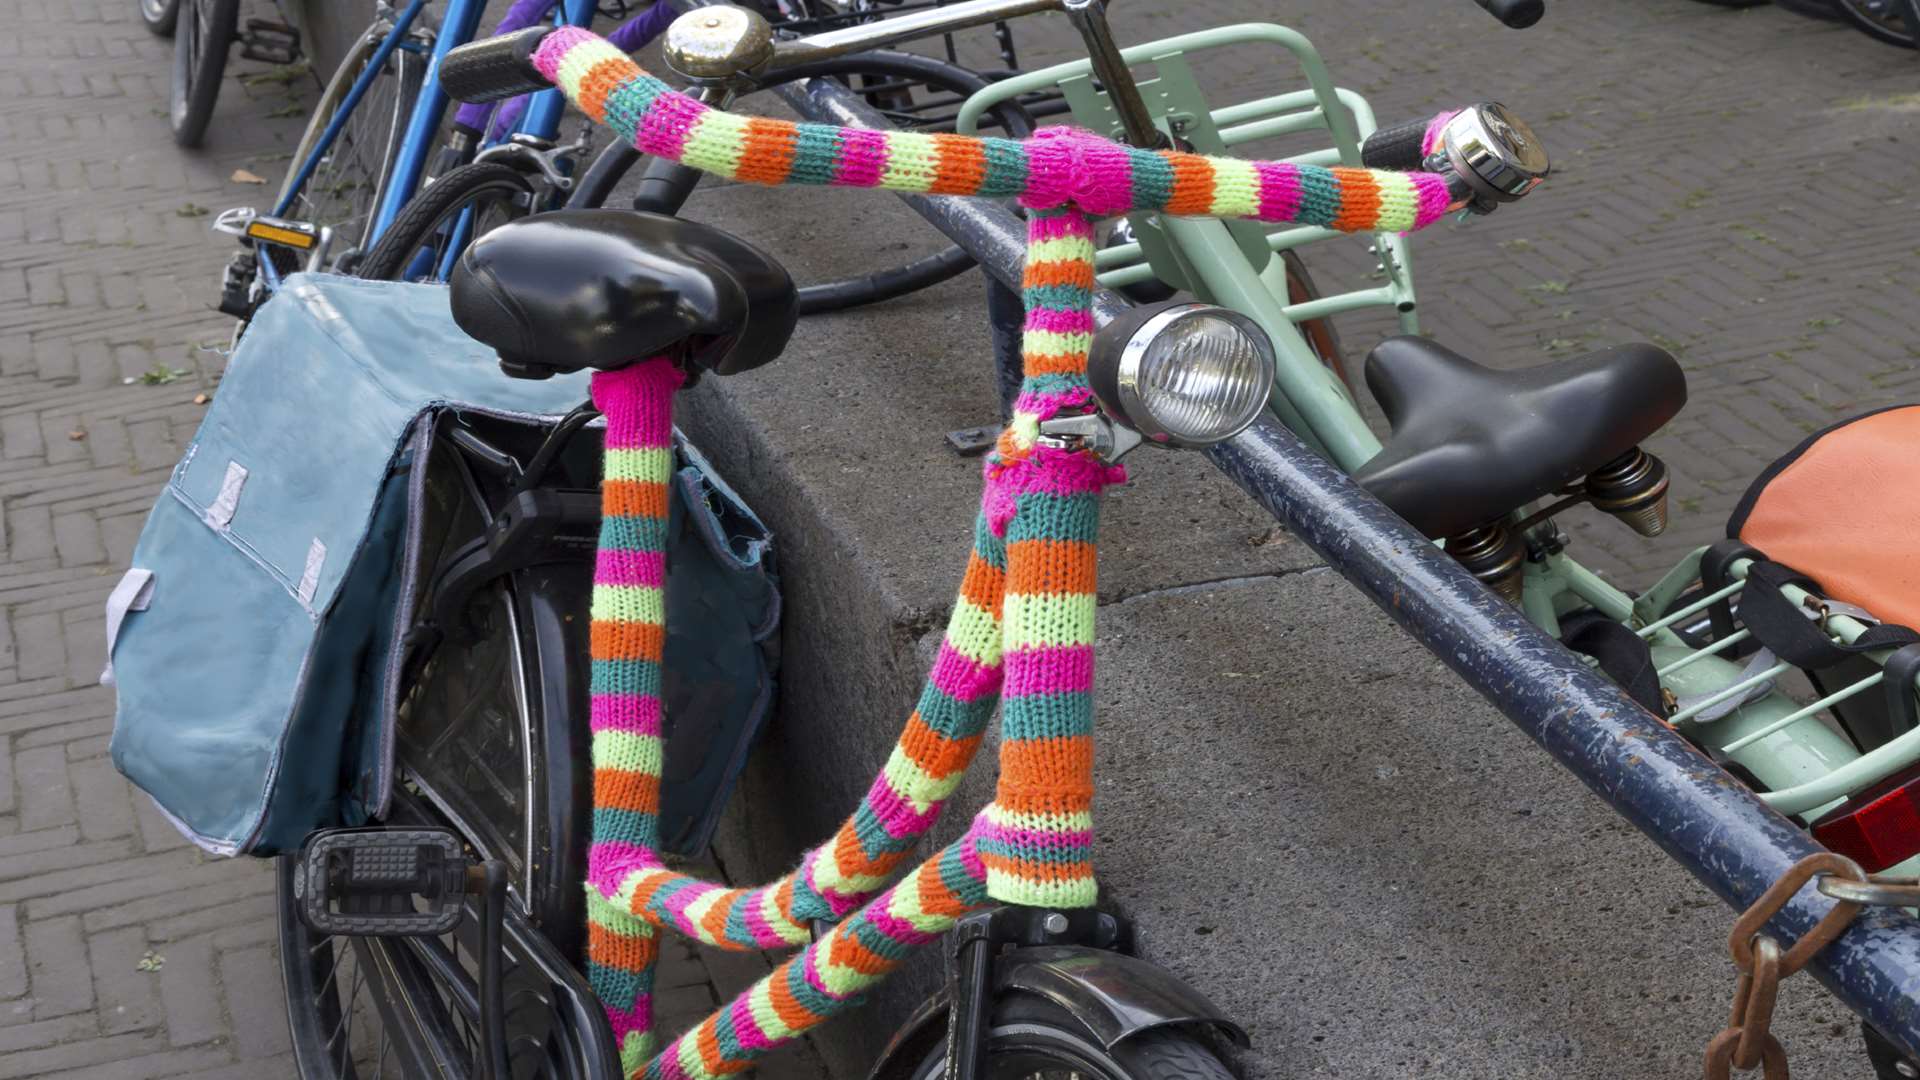 Yarn bombing on two wheels